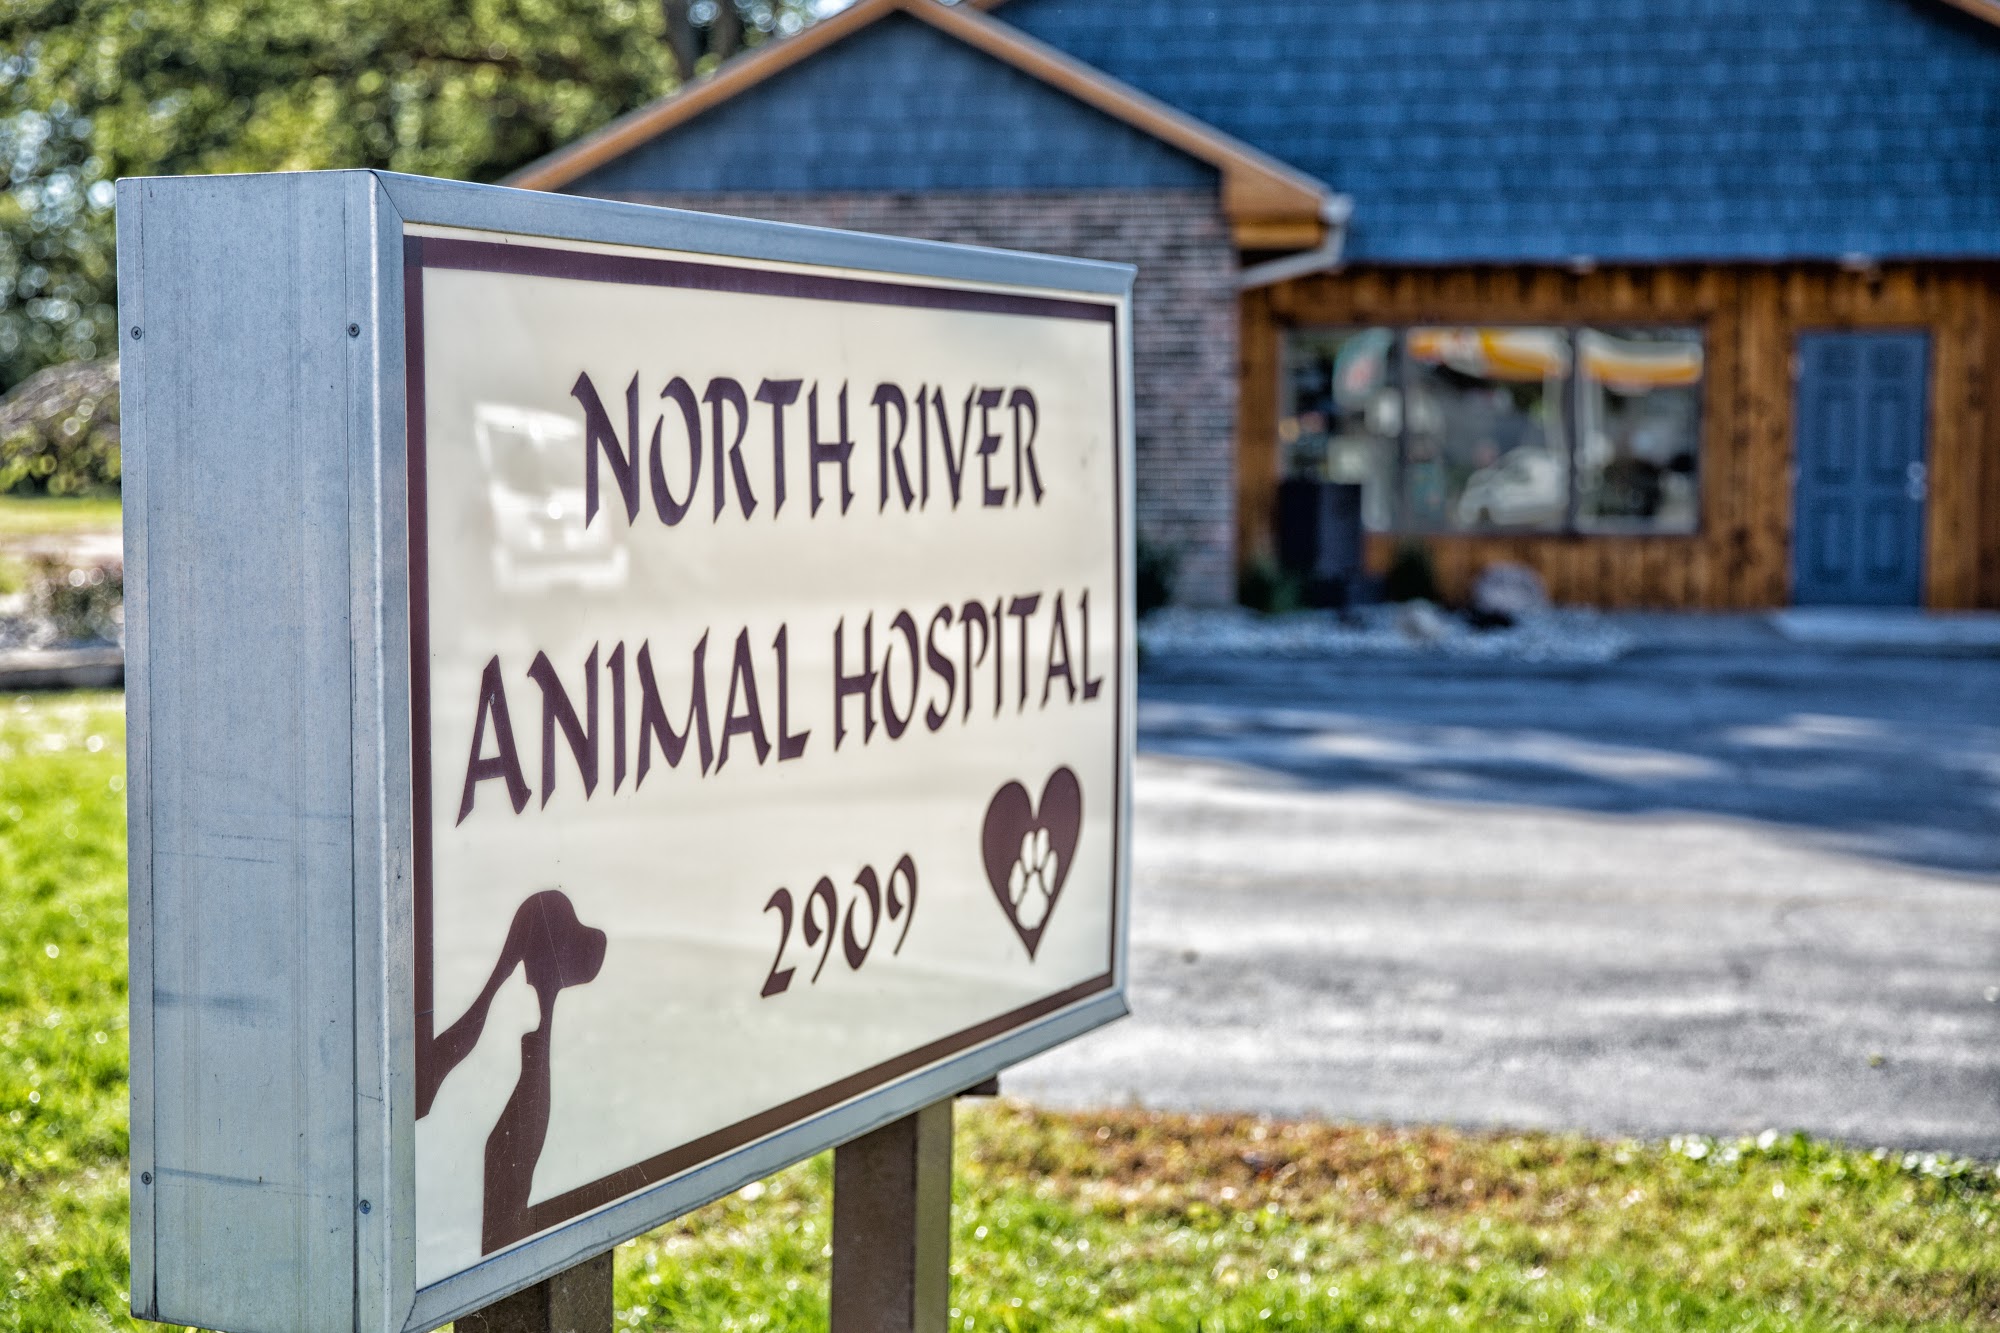 North River Animal Hospital